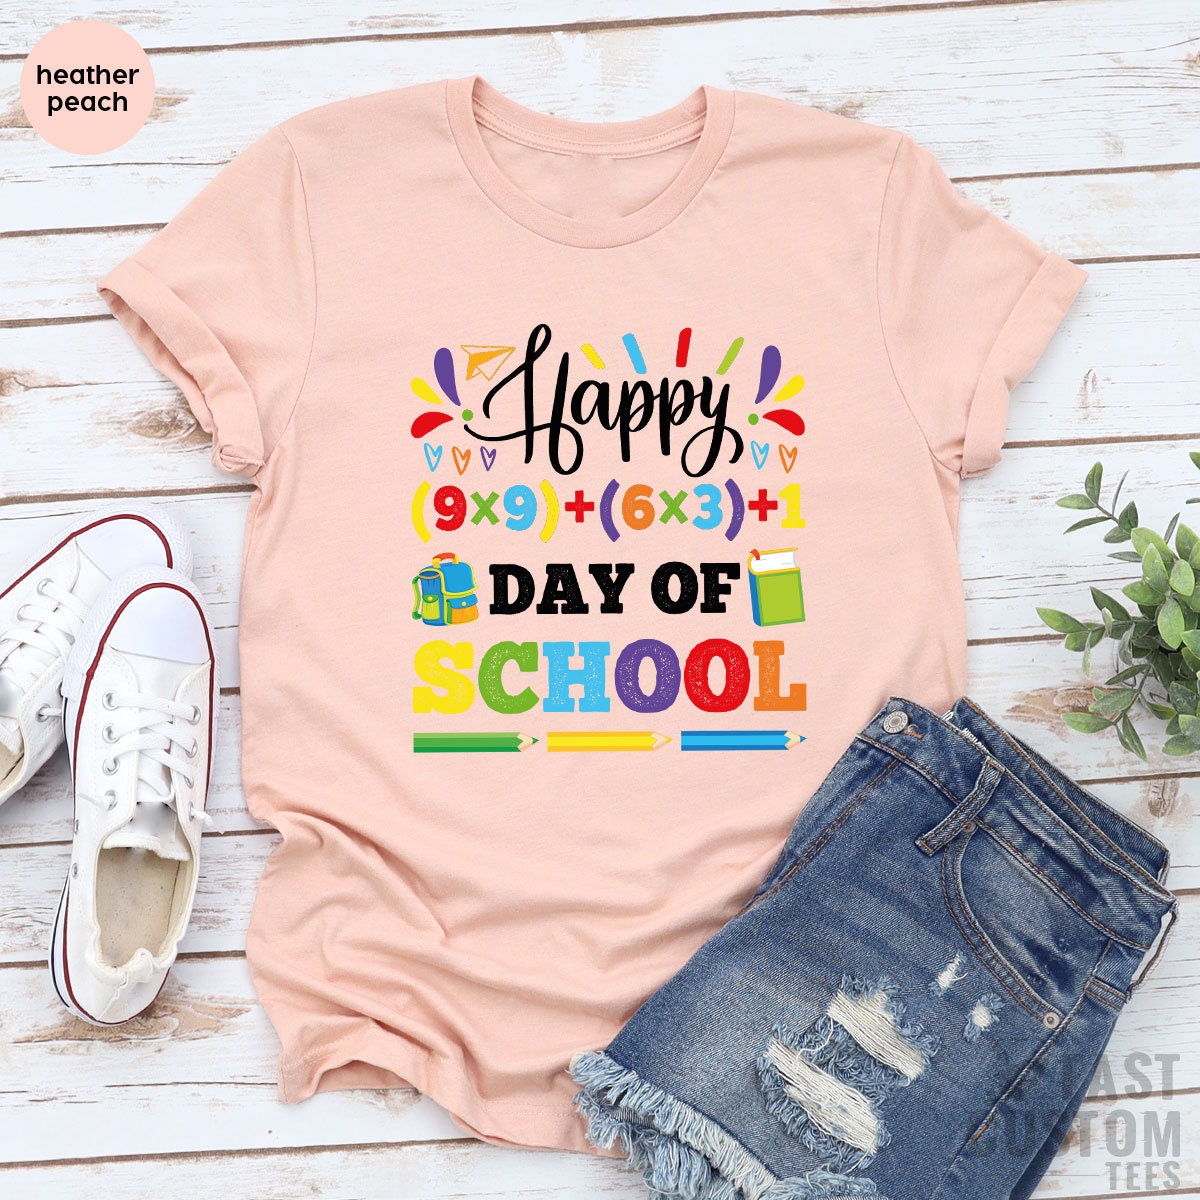 Happy 100th Day Of School Shirt, Back To School Shirt, Funny Teacher T-Shirt, Teacher Shirt, Kindergarten Shirt, Celebrate 100th Day Shirt - Fastdeliverytees.com